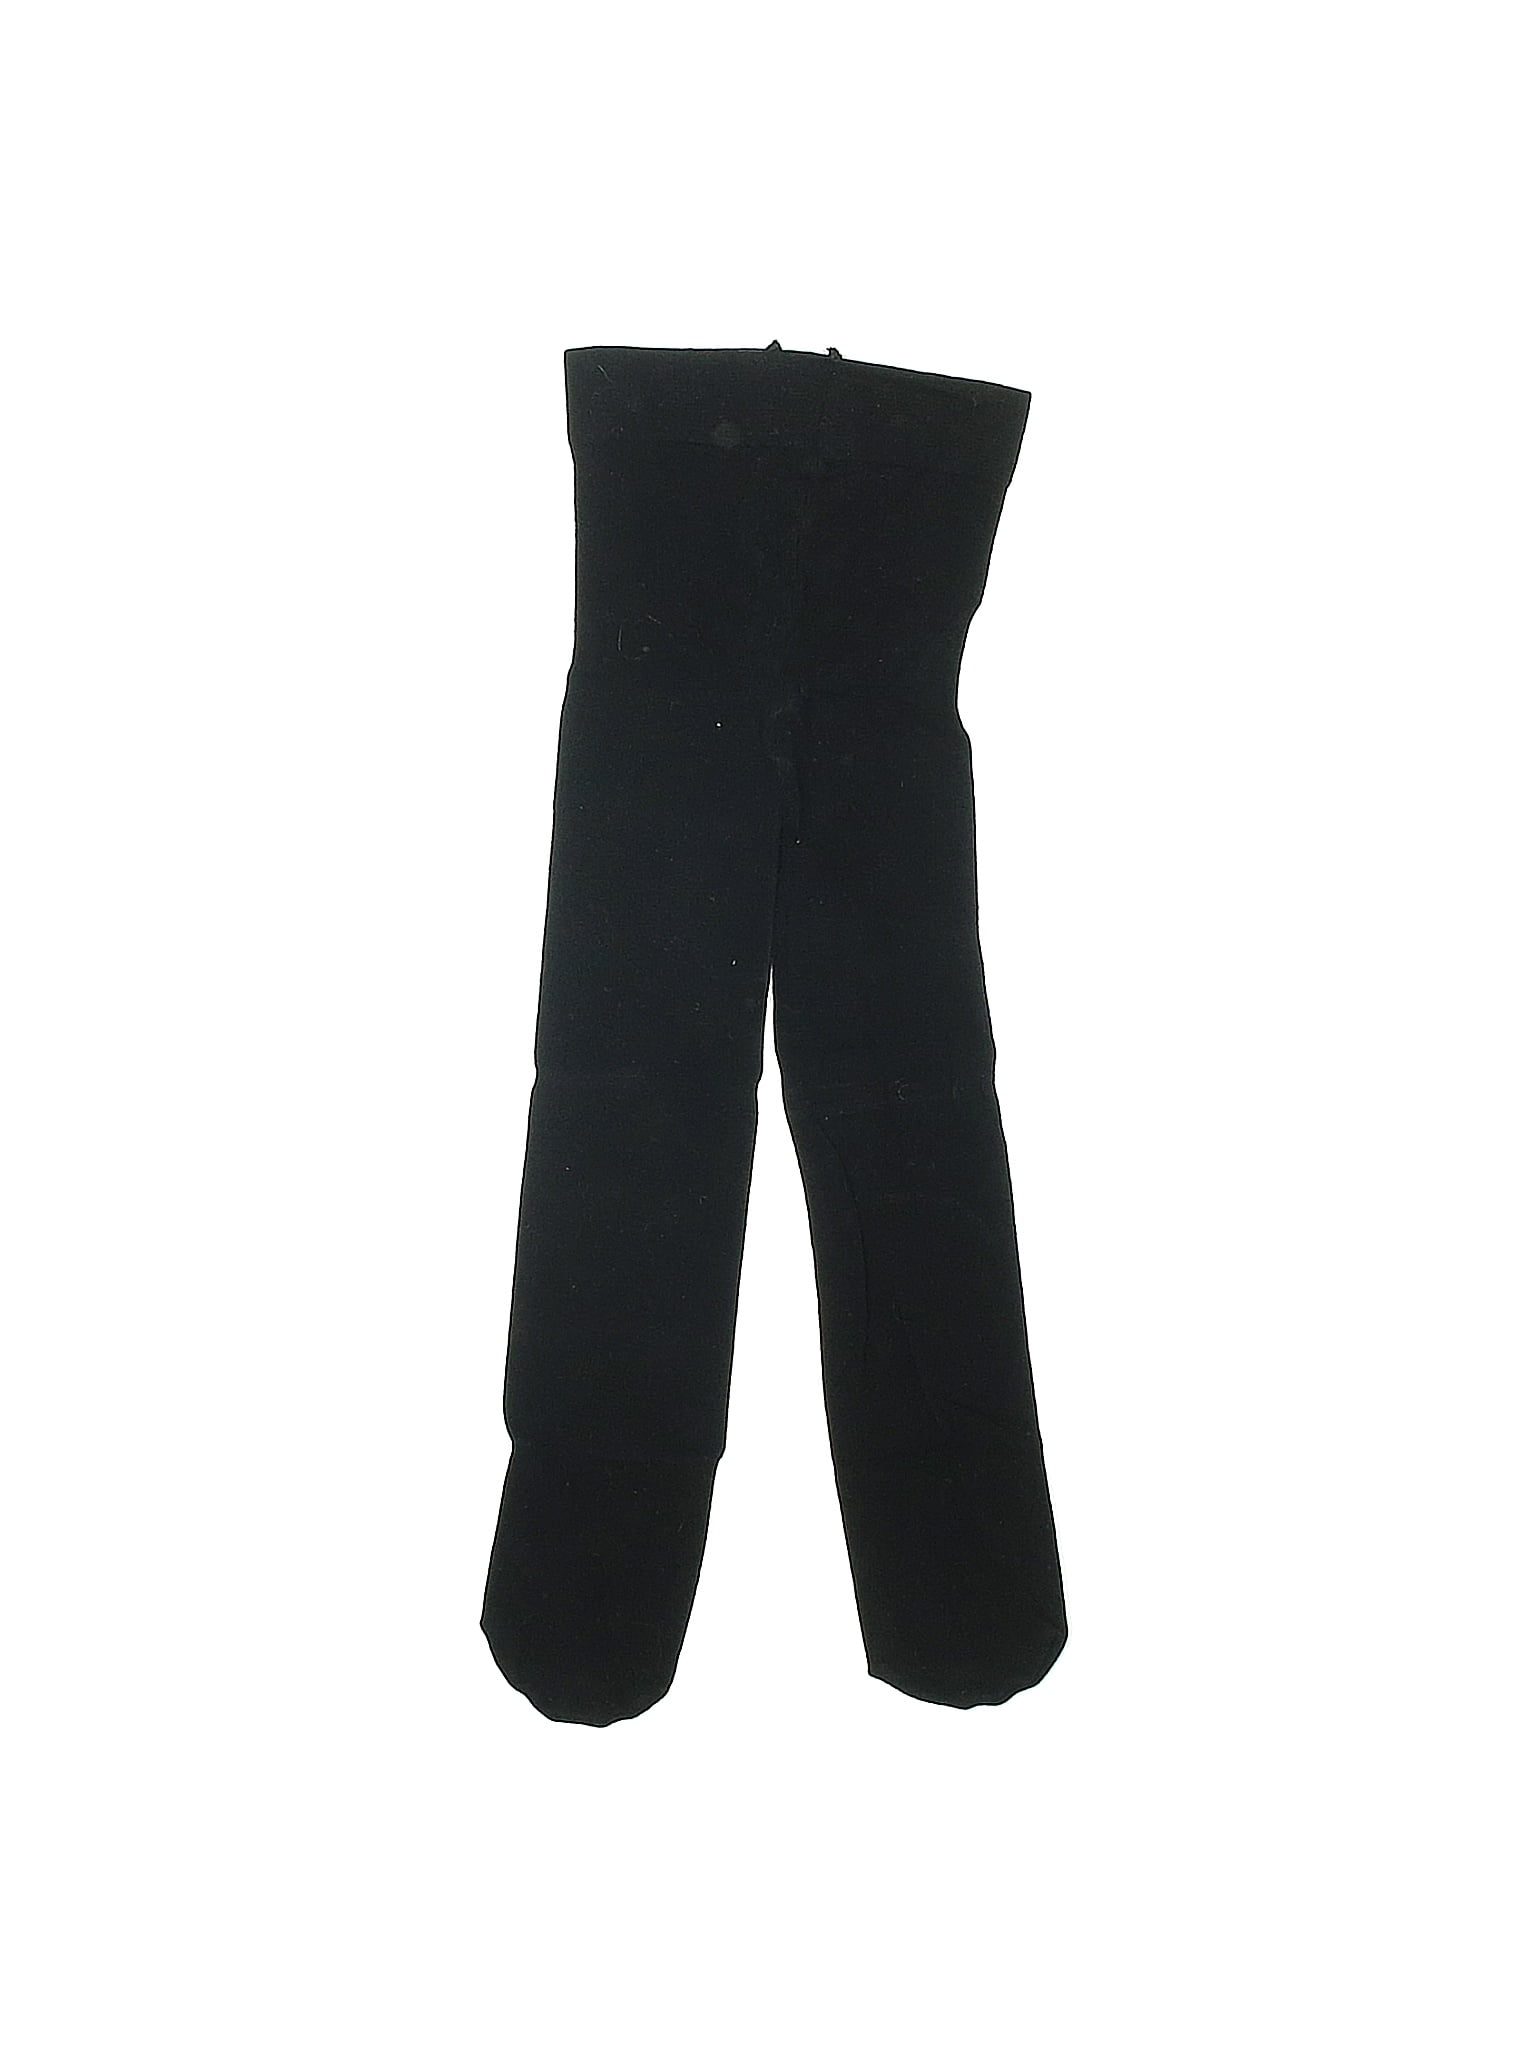 Hanes Black Casual Pants Size XL - 52% off